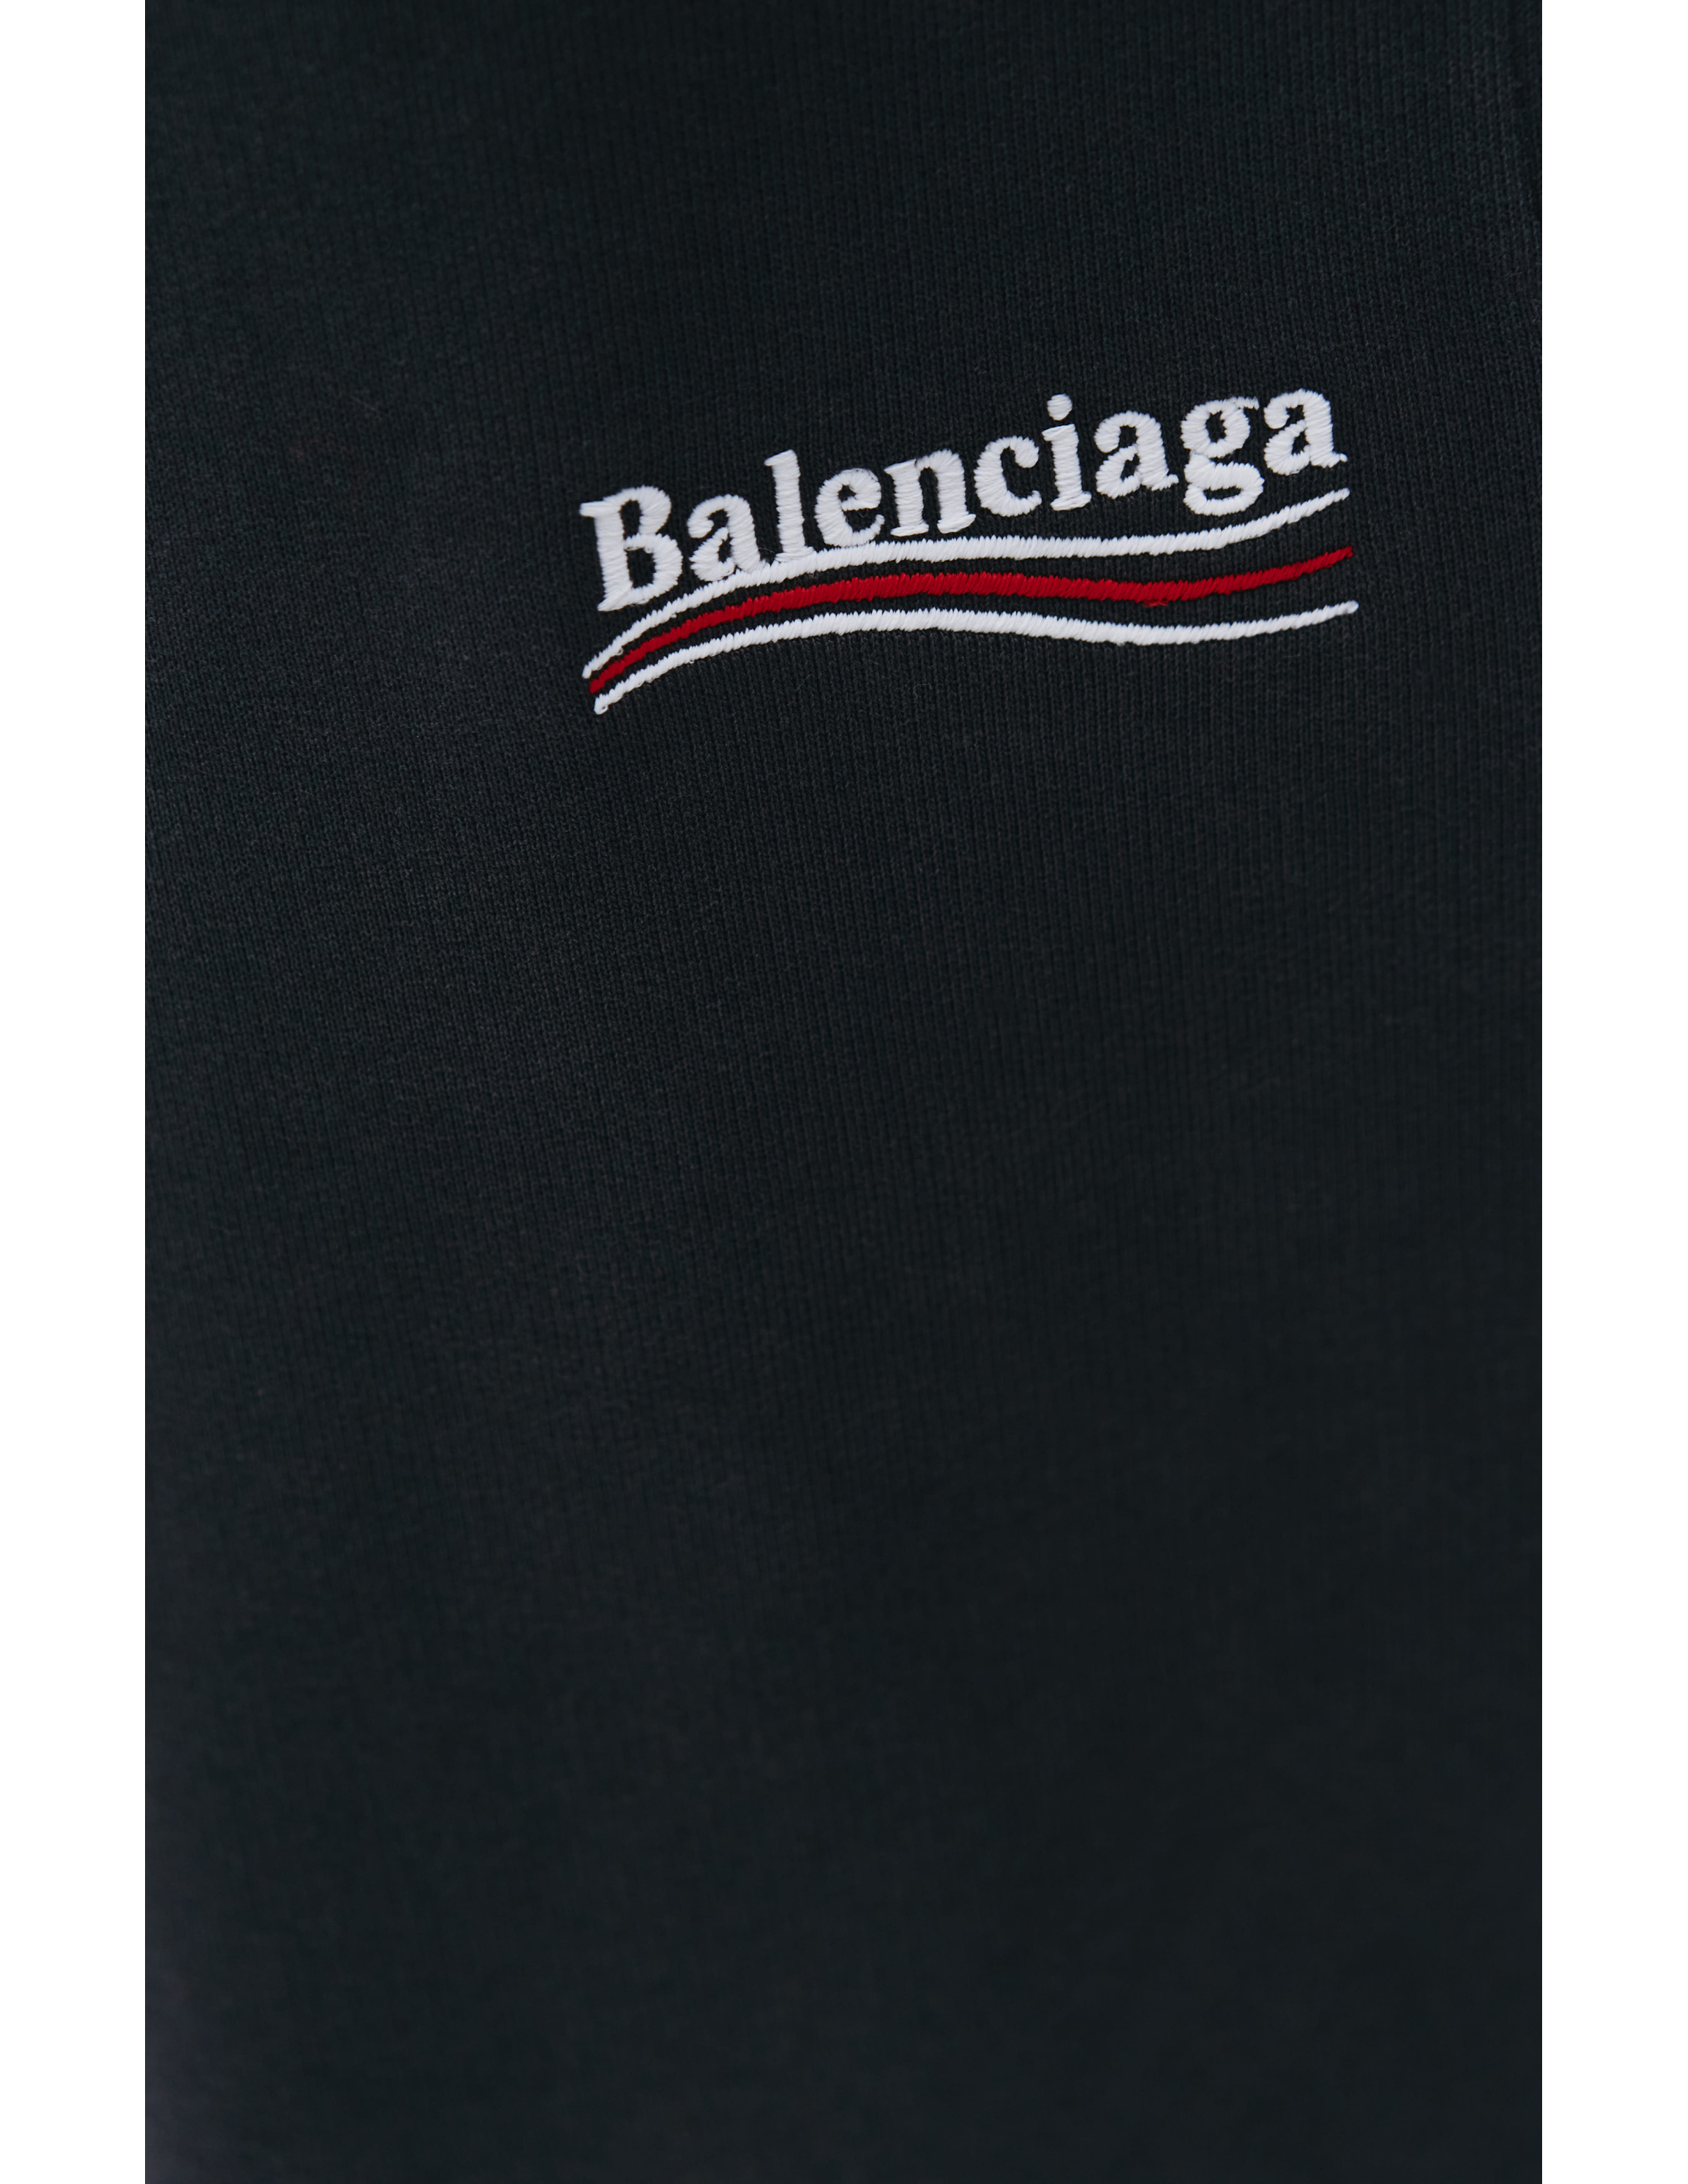 Широкие брюки с вышивкой логотипа Balenciaga 674594/TKVI9/1366, размер XXL;M;S 674594/TKVI9/1366 - фото 6